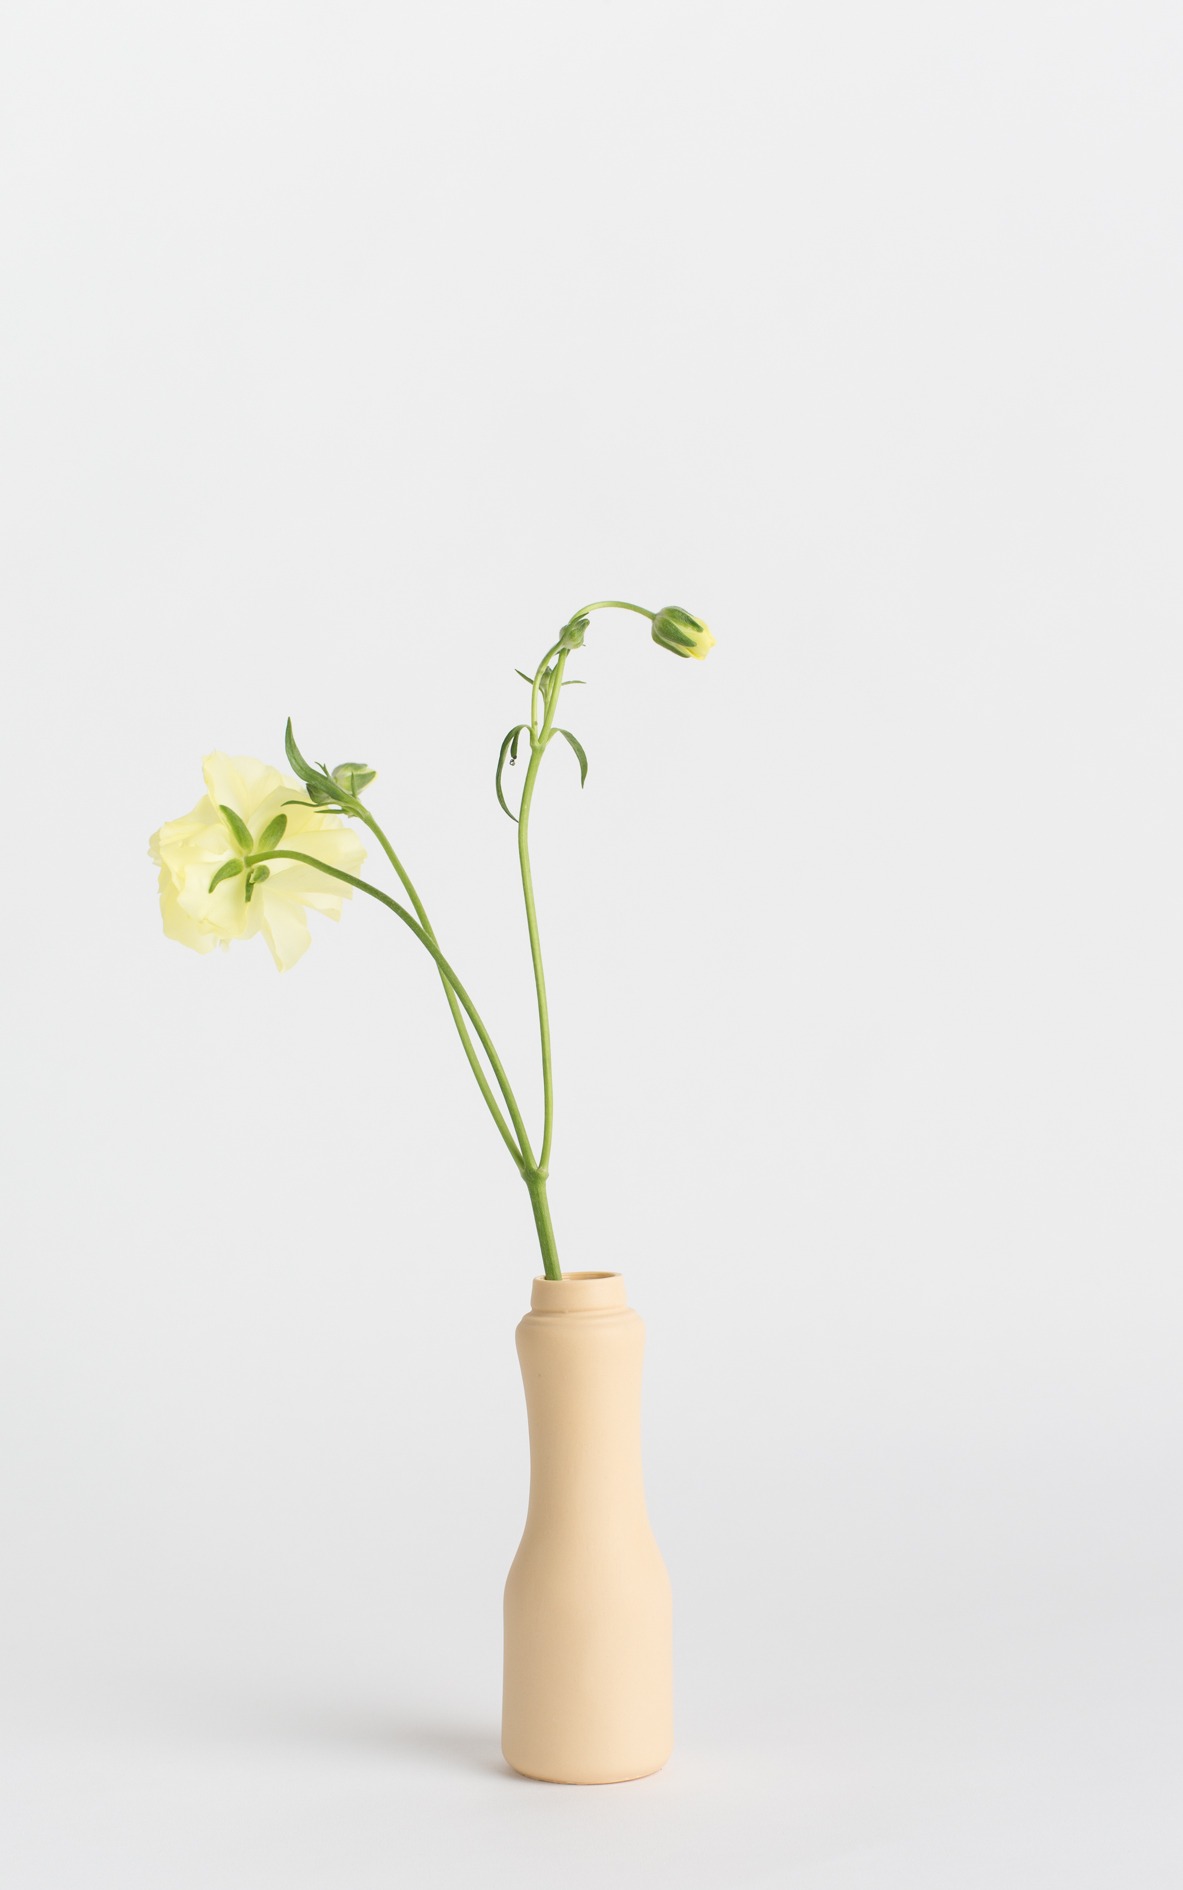 bottle vase #6 fresh yellow with flower